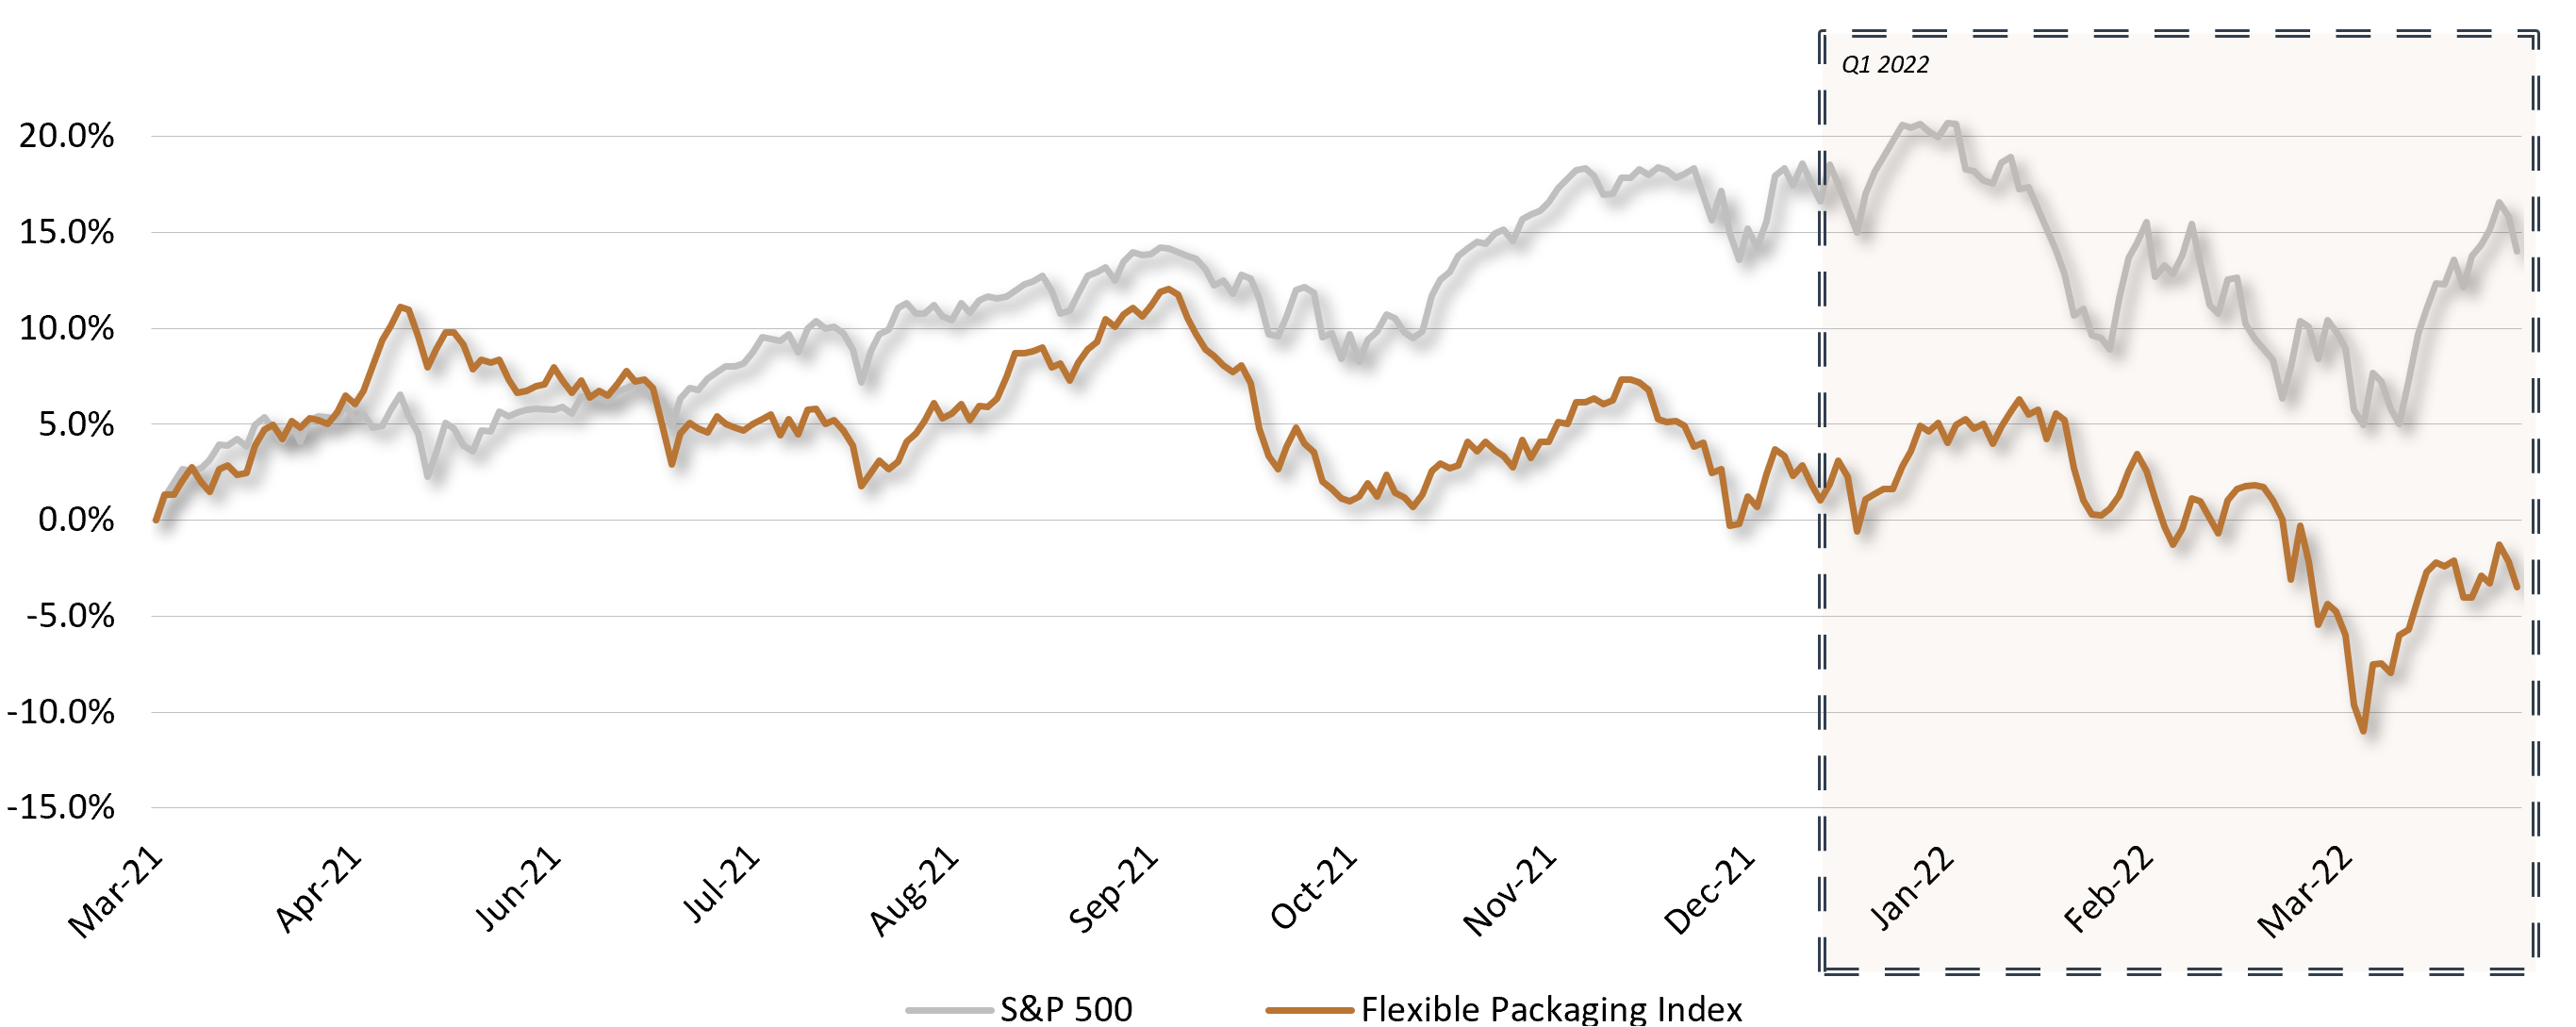 Flexible Packaging Market Performance vs S&P 500 - Q1 2022